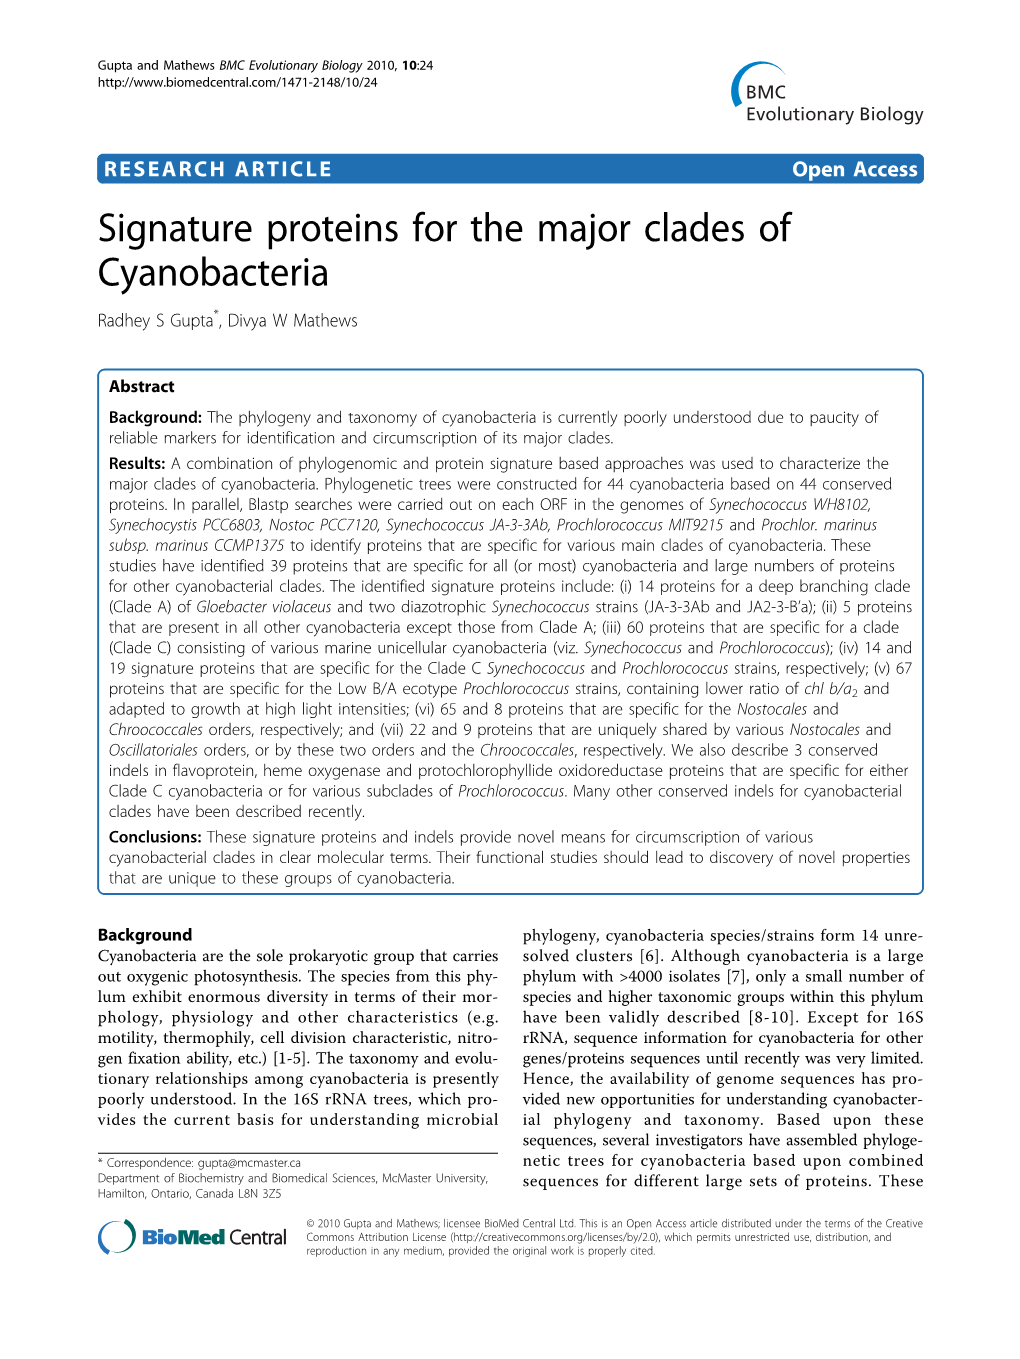 Signature Proteins for the Major Clades of Cyanobacteria Radhey S Gupta*, Divya W Mathews